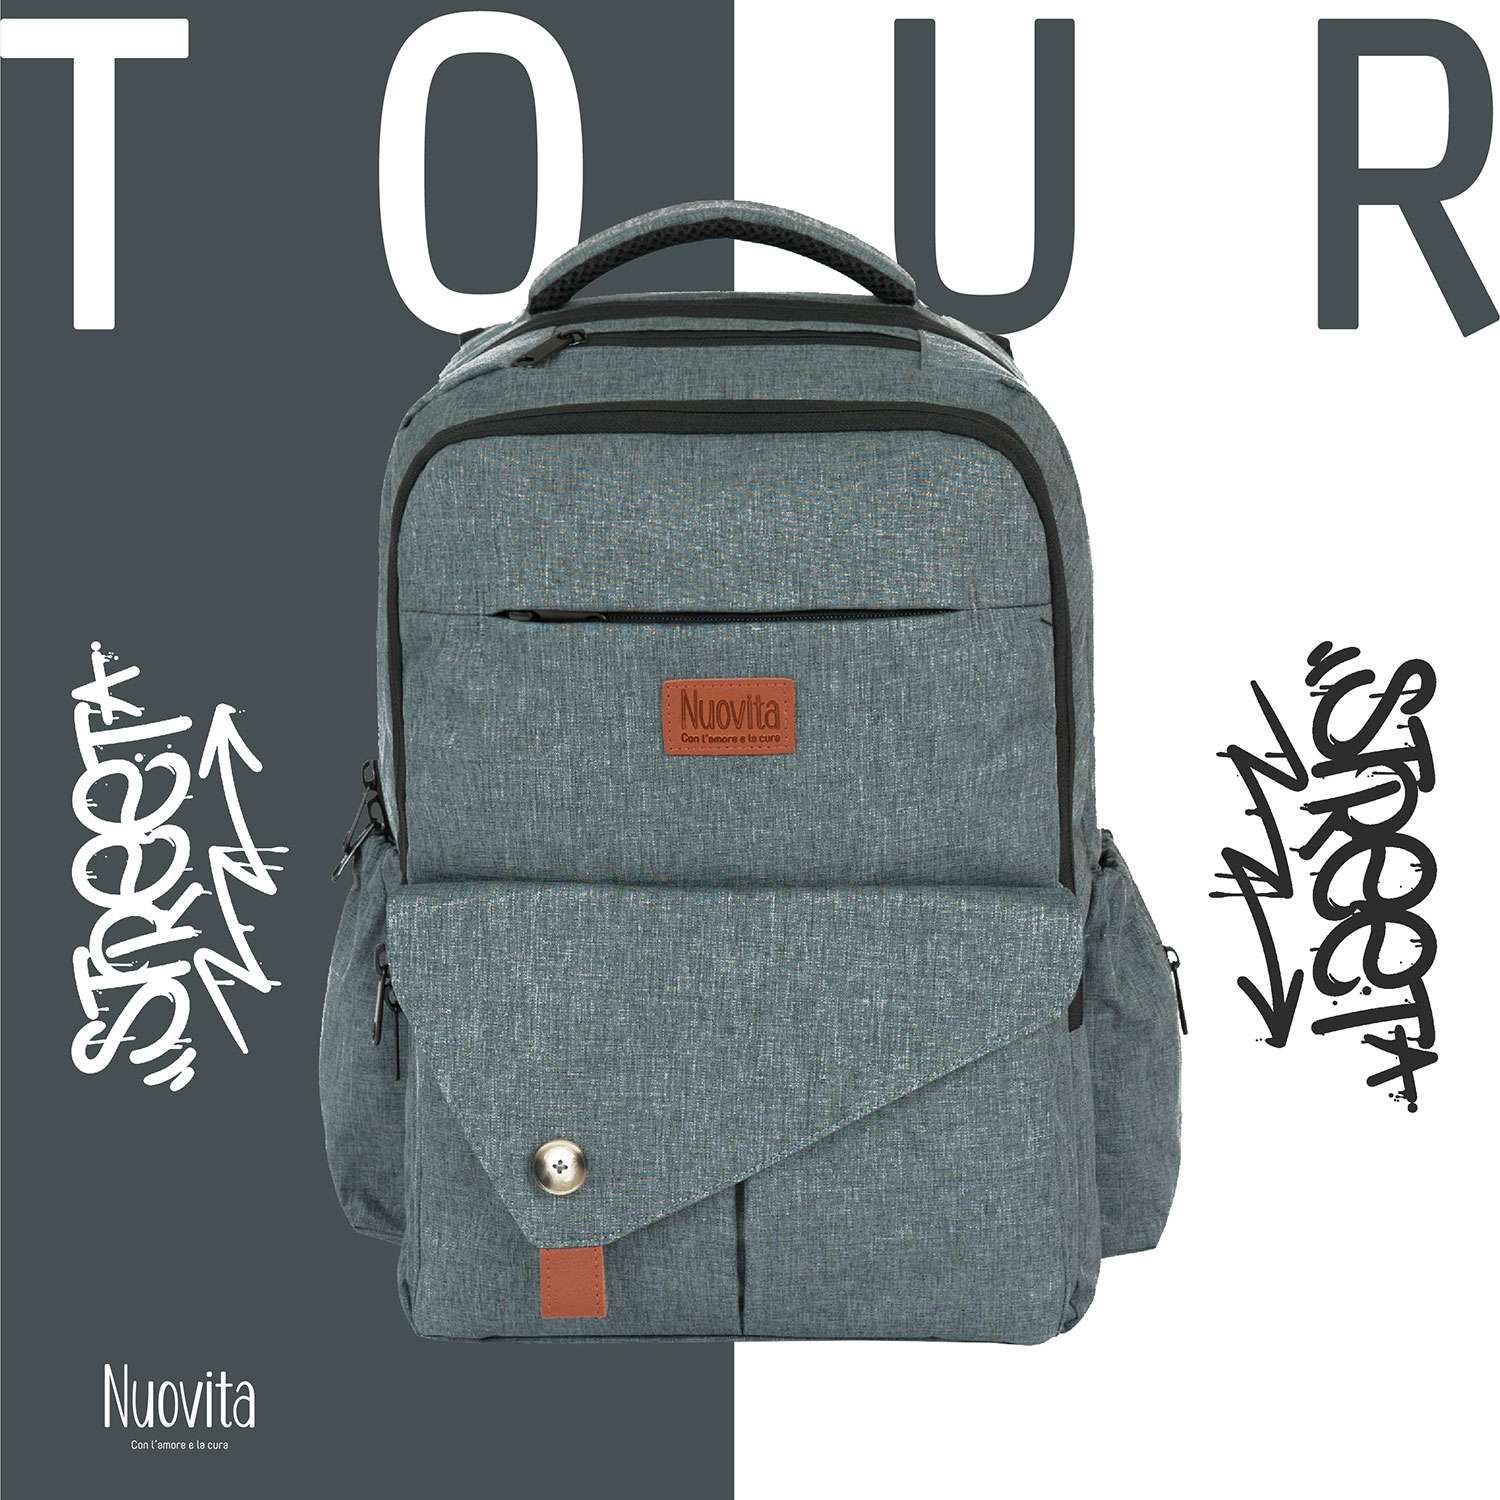 Рюкзак для мамы Nuovita CAPCAP tour Серый - фото 2